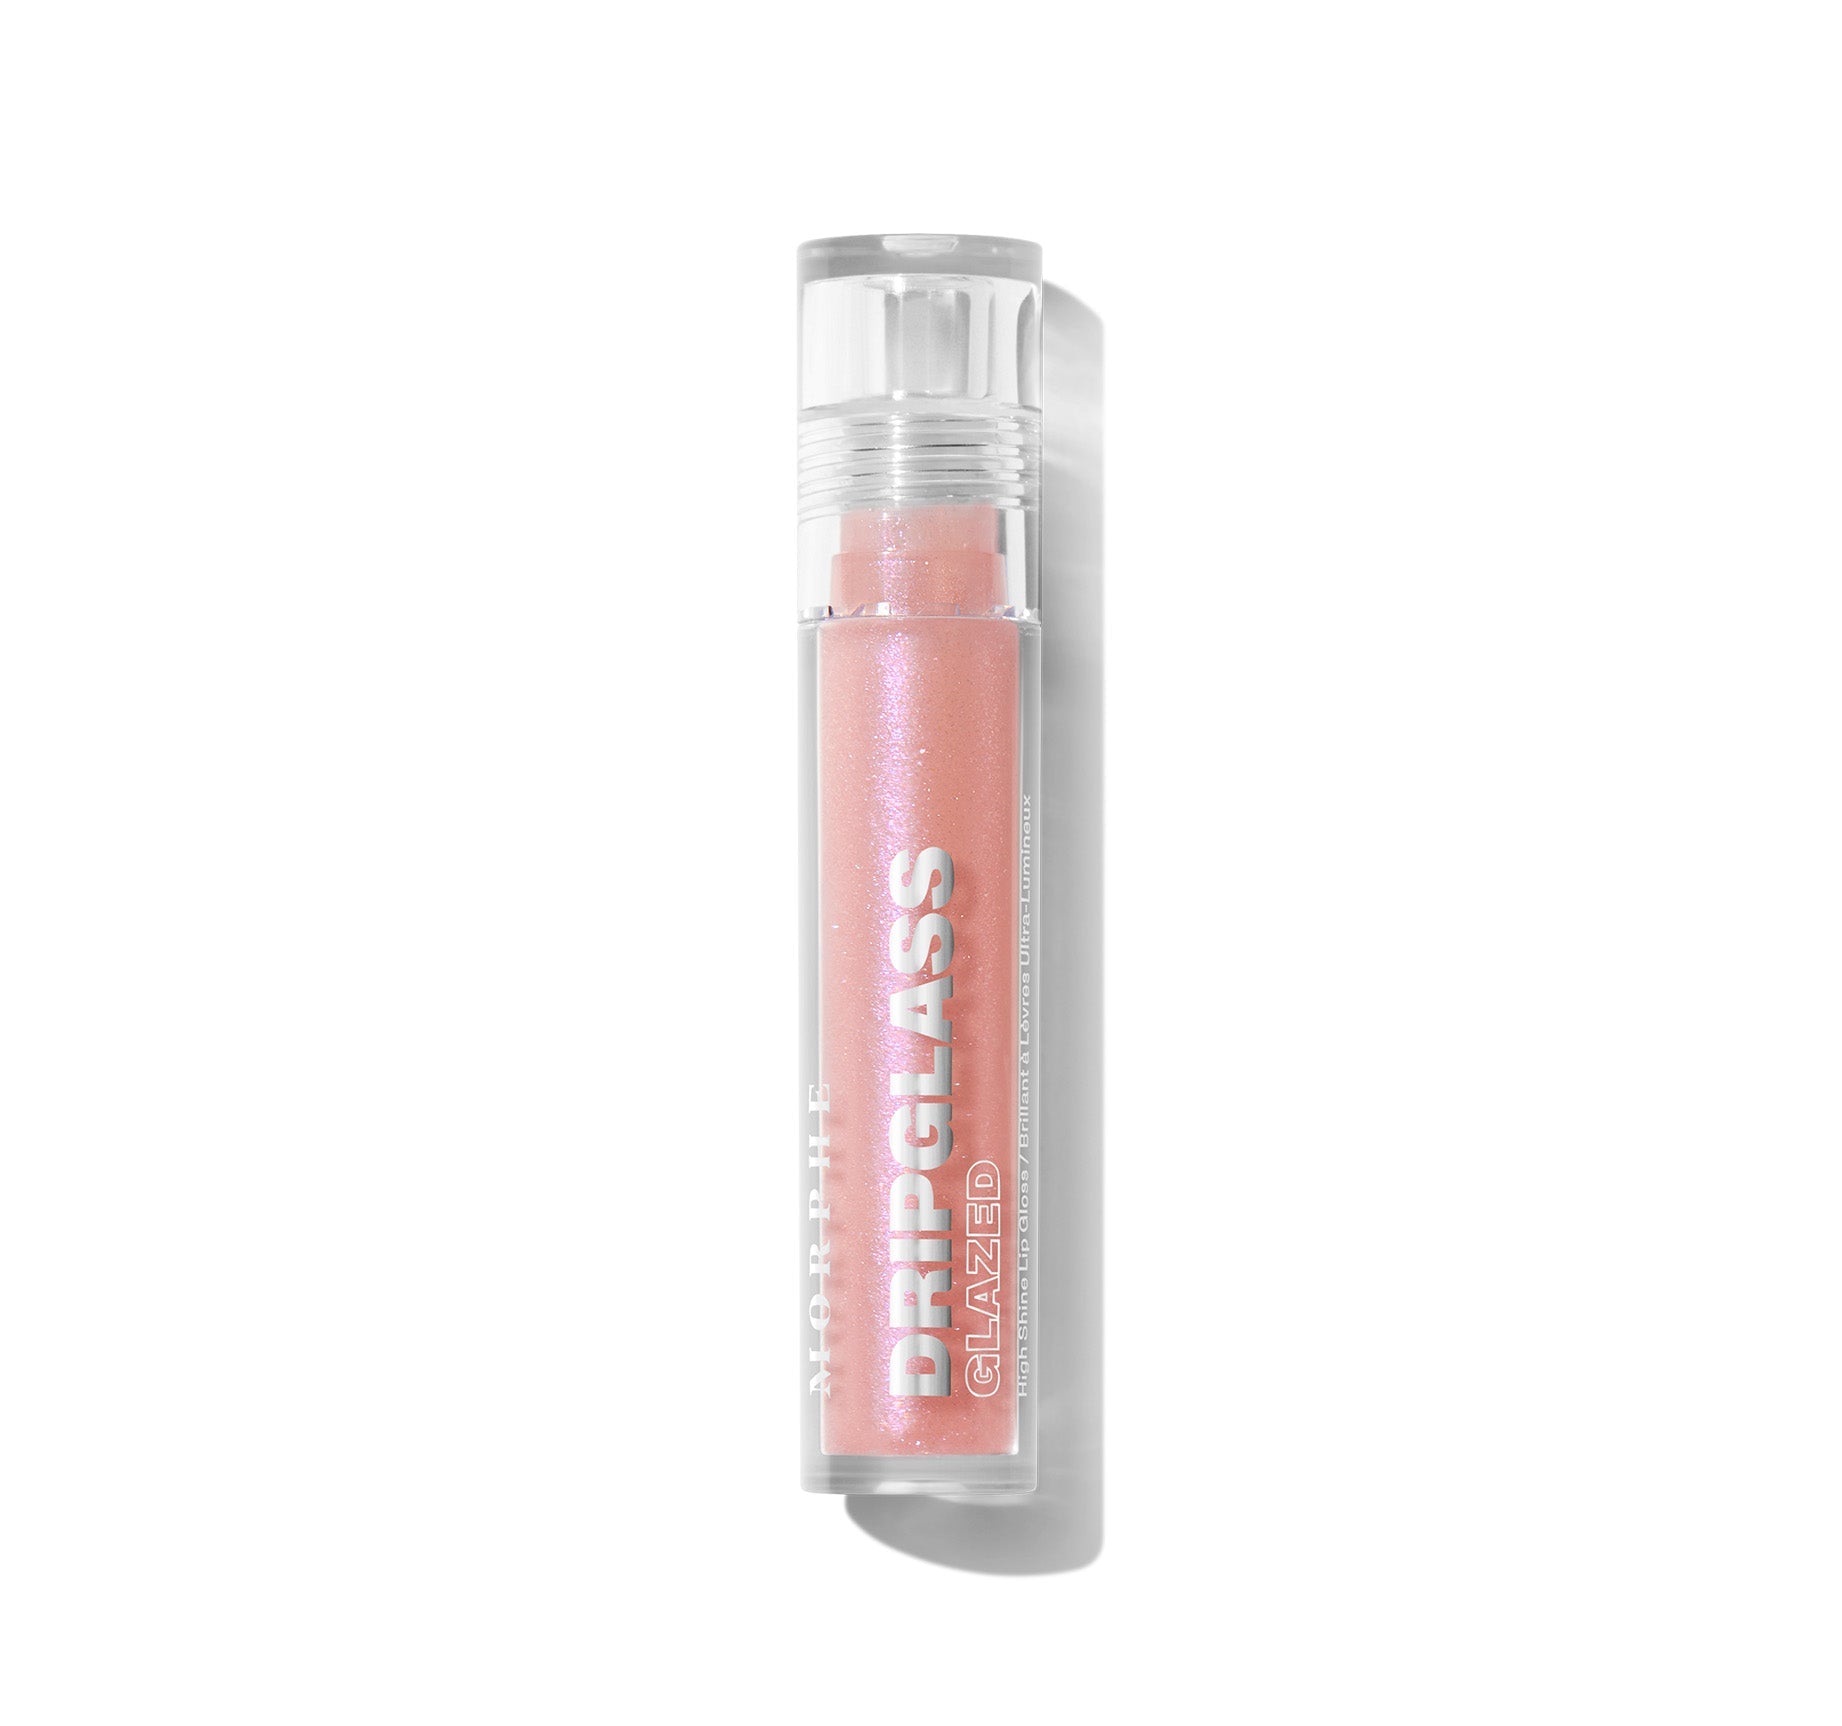 Aurascape Dripglass Glazed Highshine Pearlized Lip Gloss - Frose Bliss - Image 7